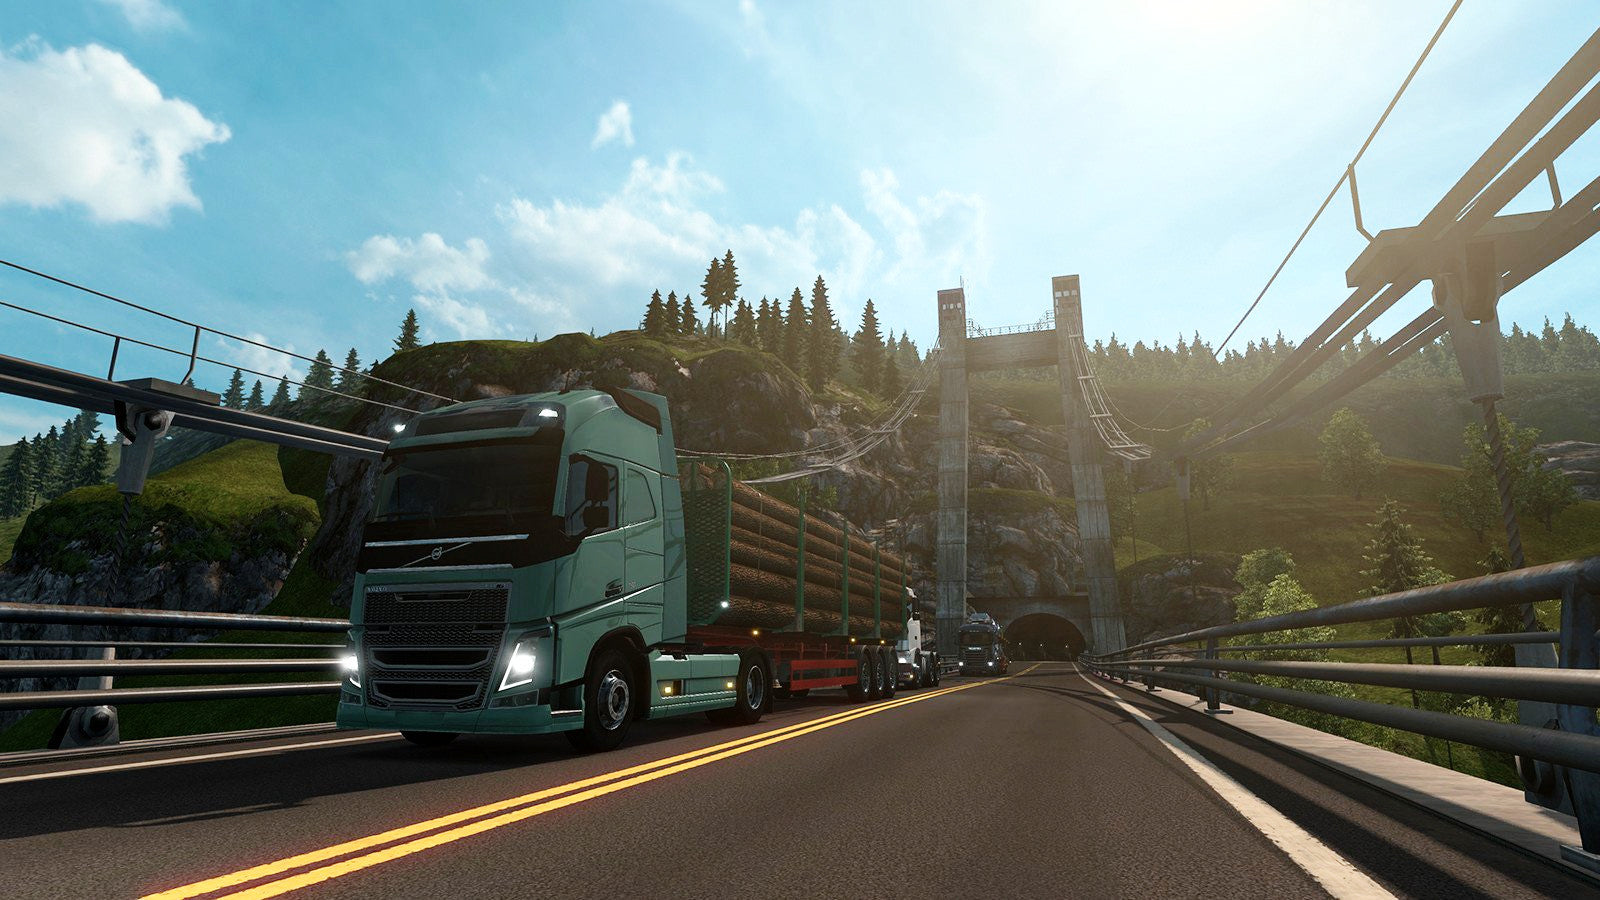 Download & European Truck Simulator on PC & Mac (Emulator)